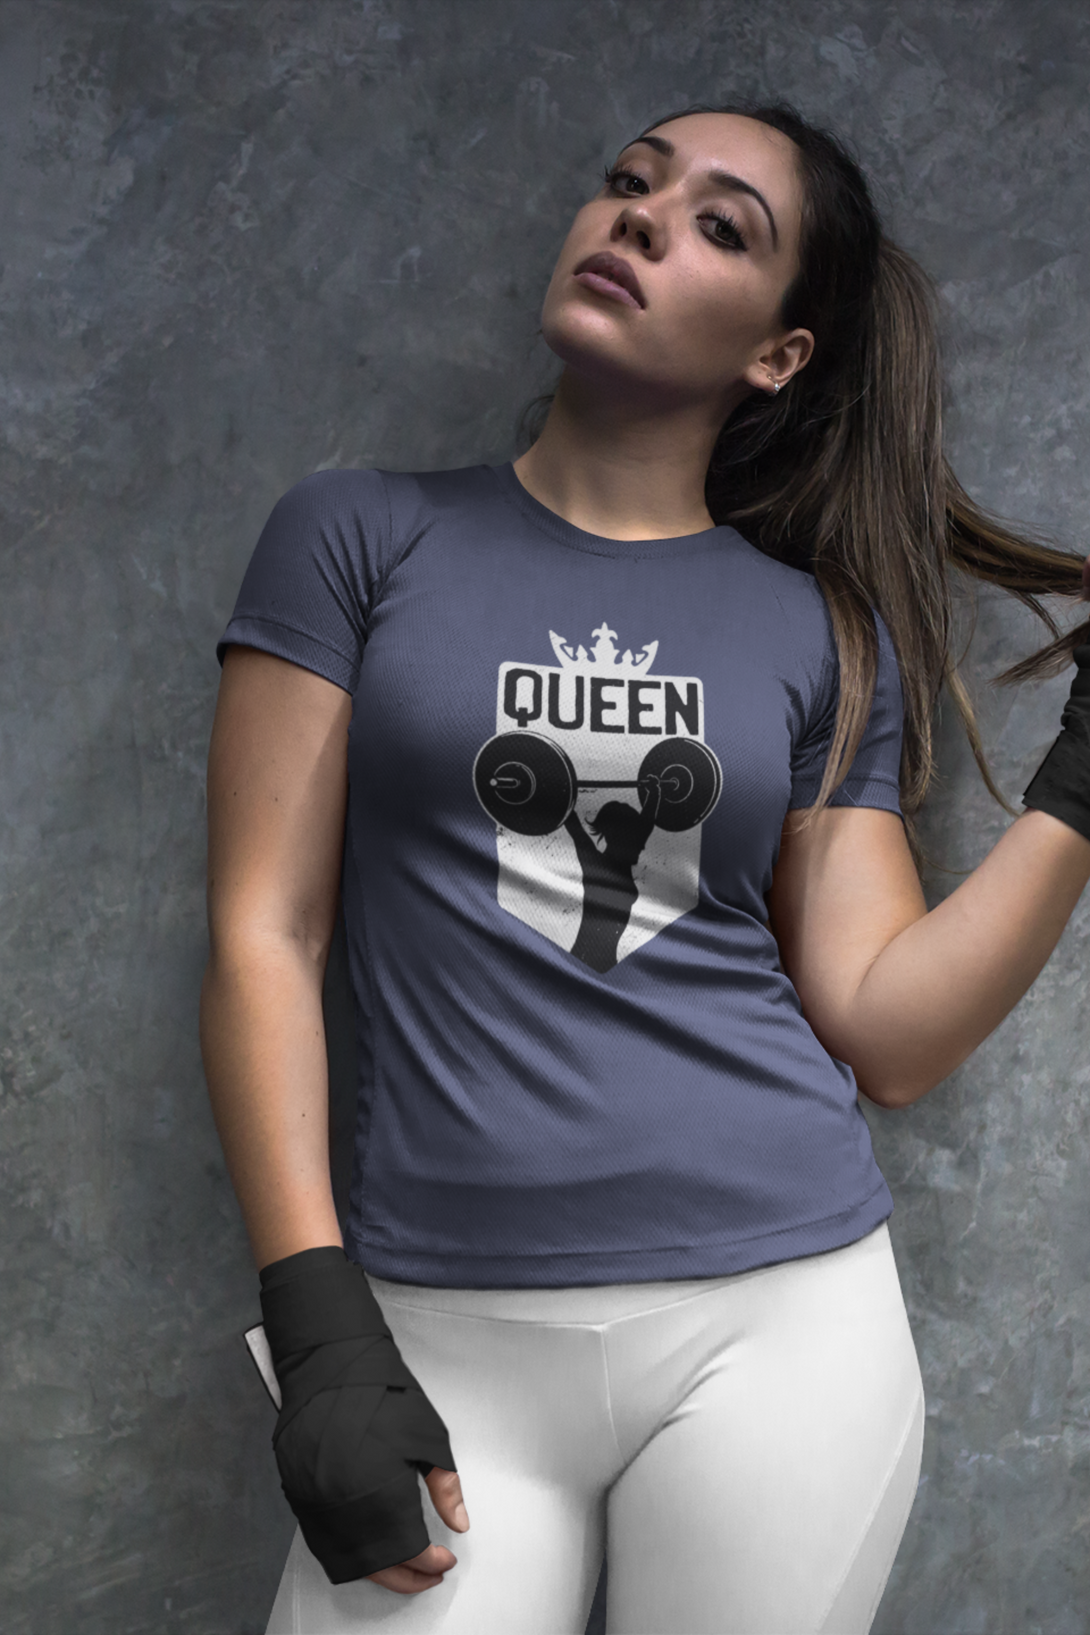 Queen Printed T-Shirt For Women - WowWaves - 3